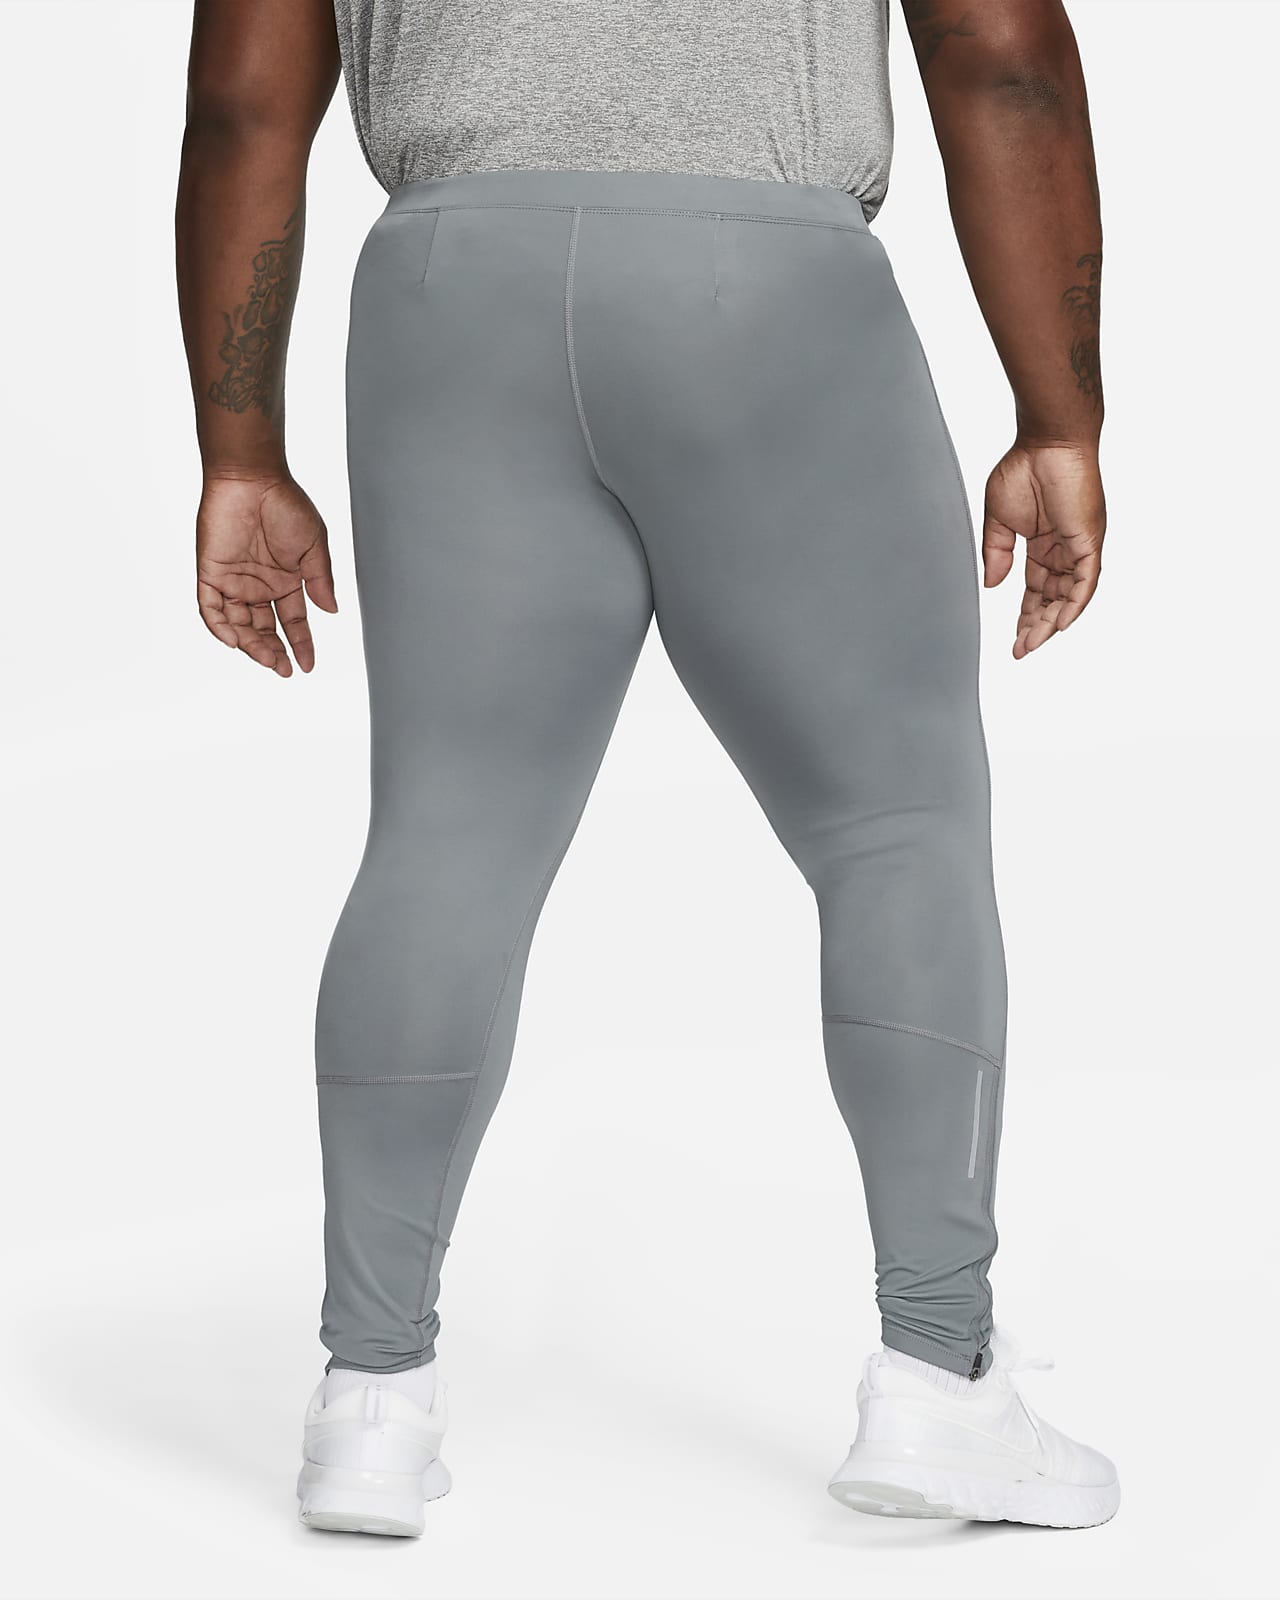 Nike Repel Challenger Tight Men - Olive, Grey, DD6700-326